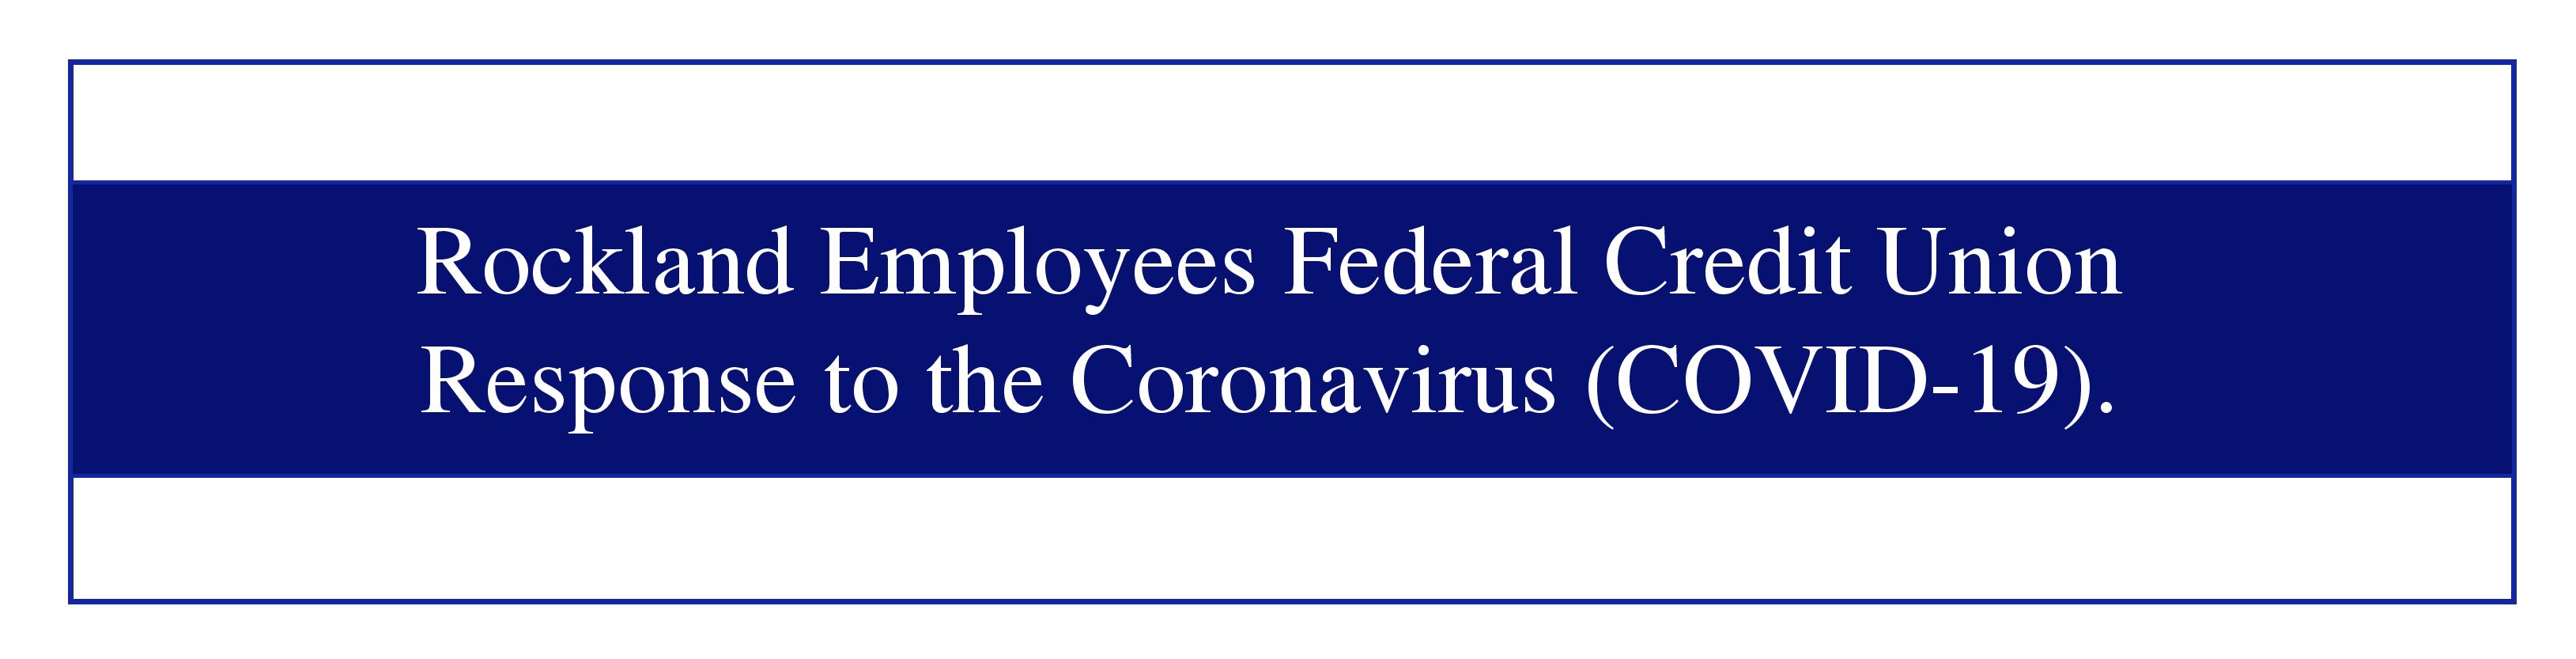 REFCU response to Coronavirus (COVID-19) 